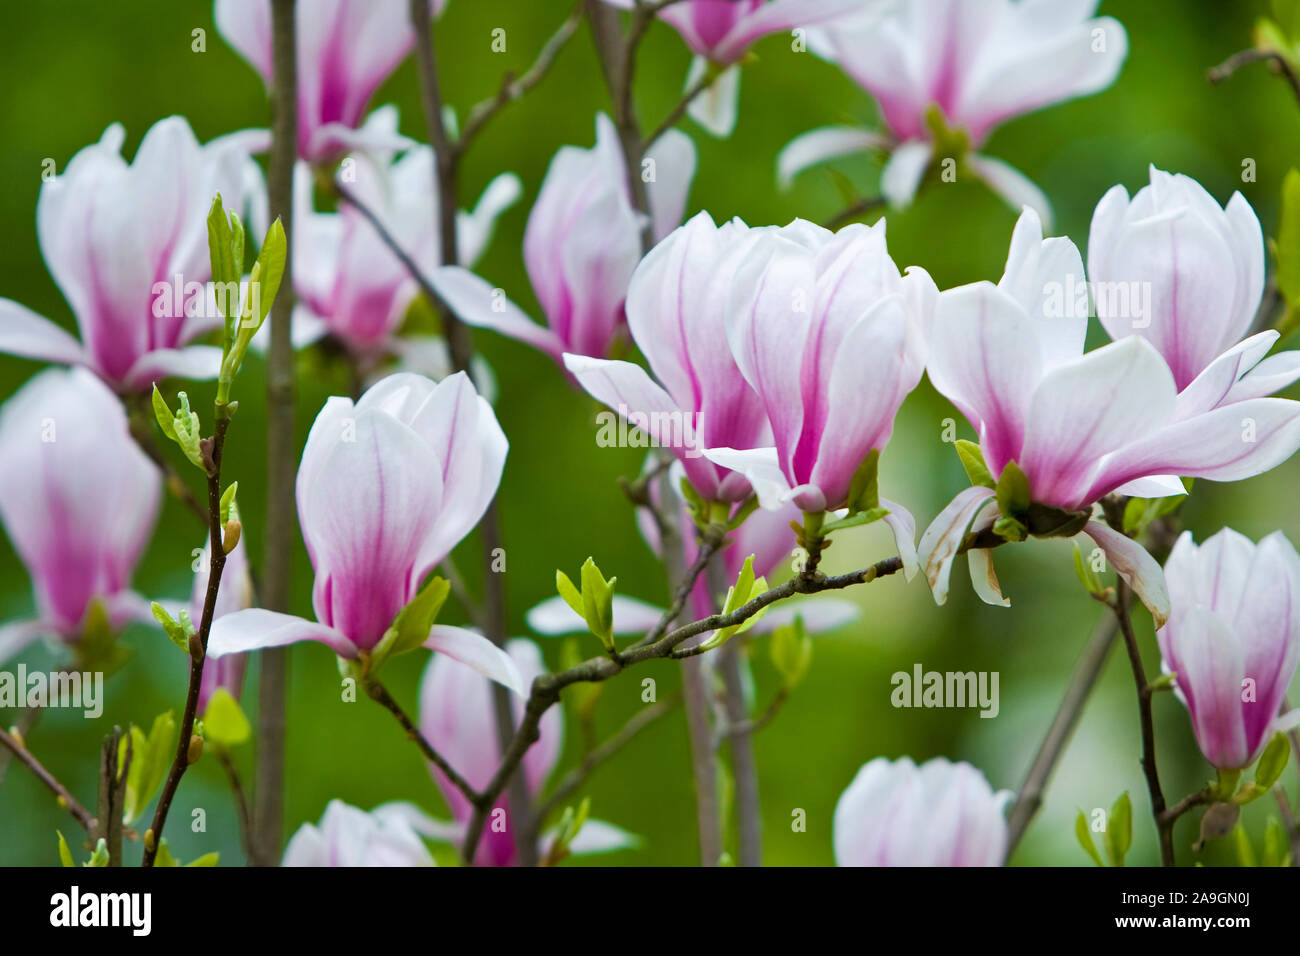 Magnolienblüten - magnolia blossoms Stock Photo